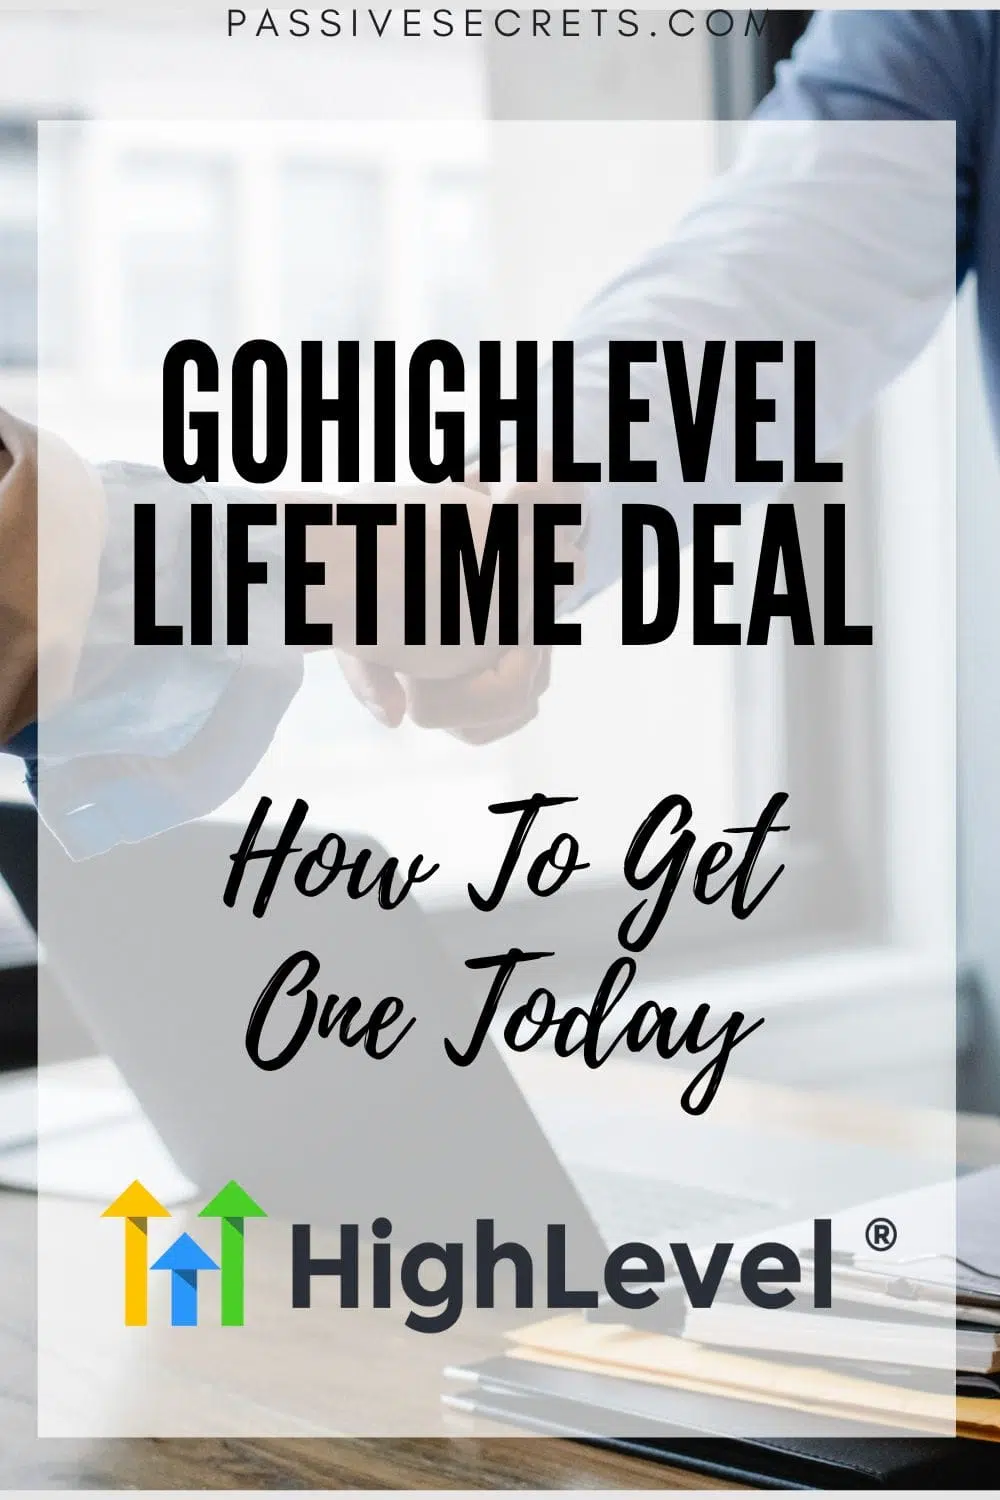 gohighlevel lifetime deal PassiveSecrets